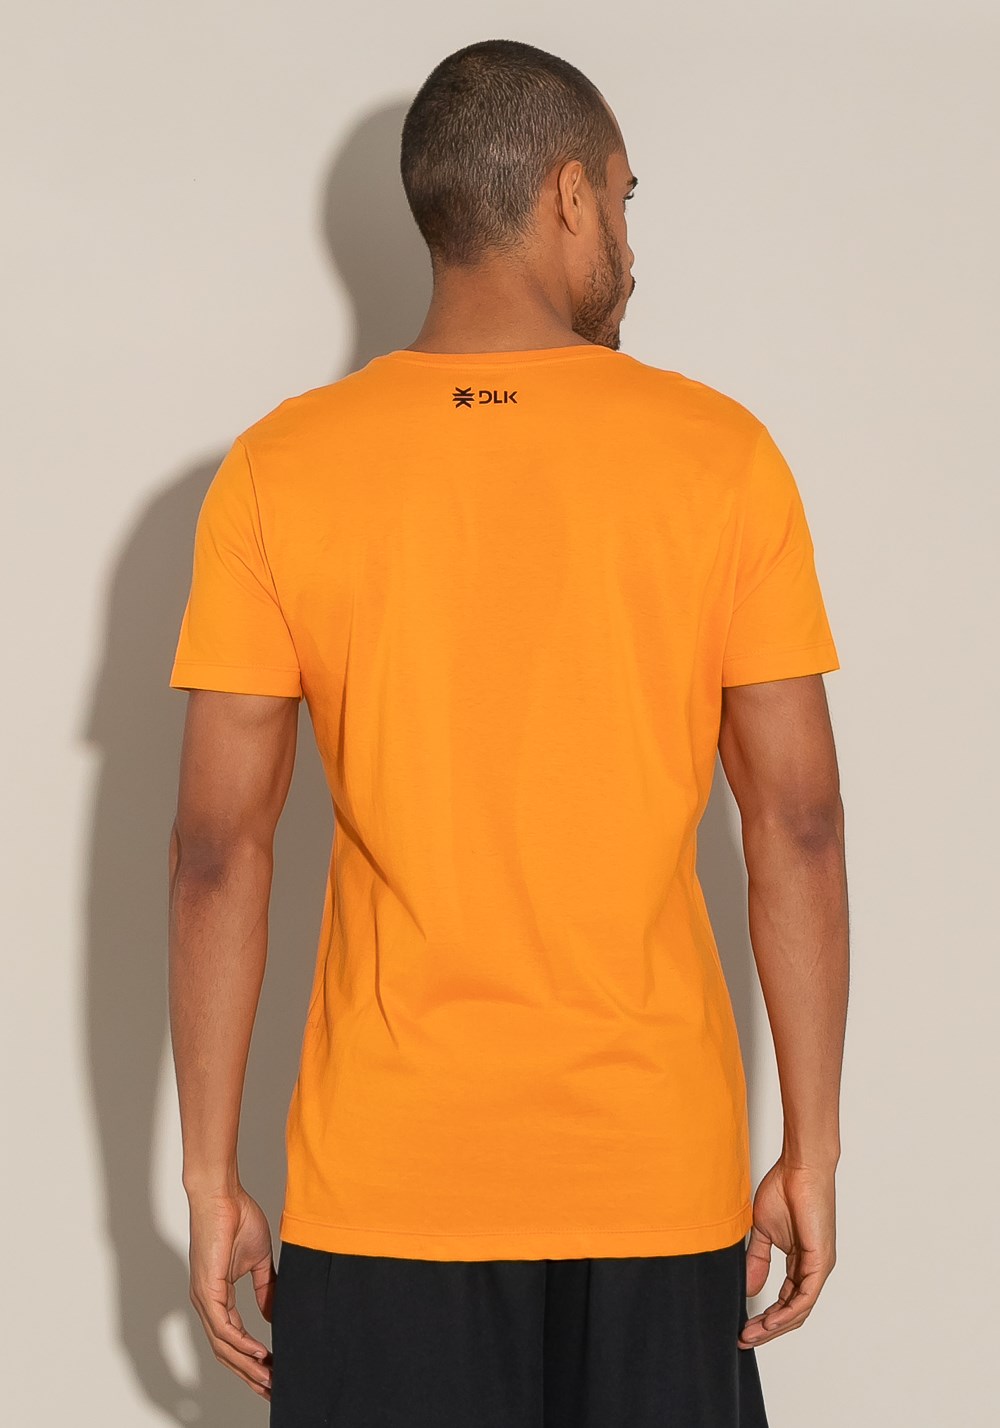 Camiseta manga curta for men motivation laranja